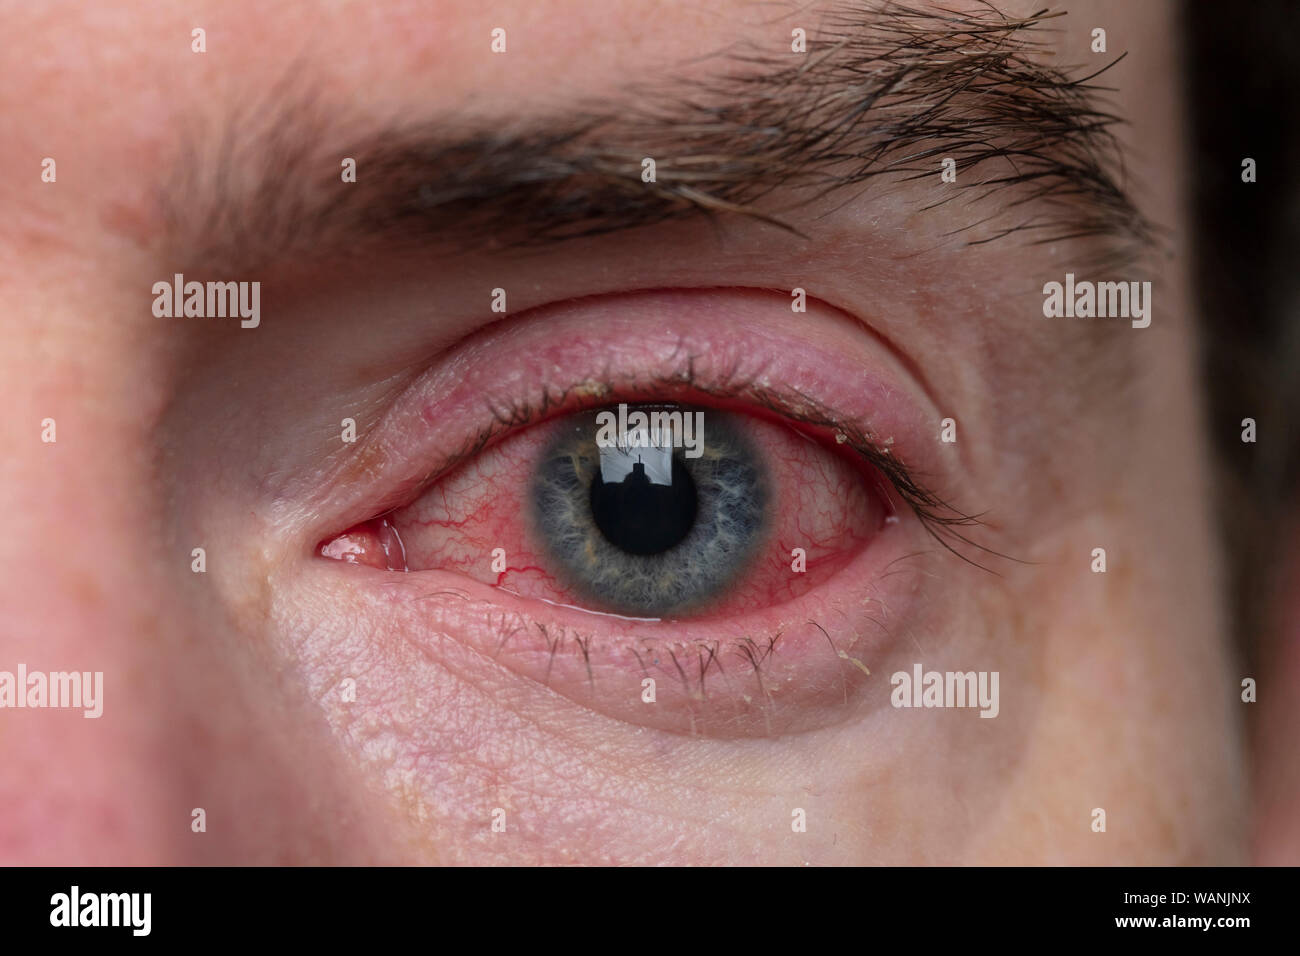 Close up of a severe bloodshot eye. Blepharitis, Conjunctivitis condition Stock Photo